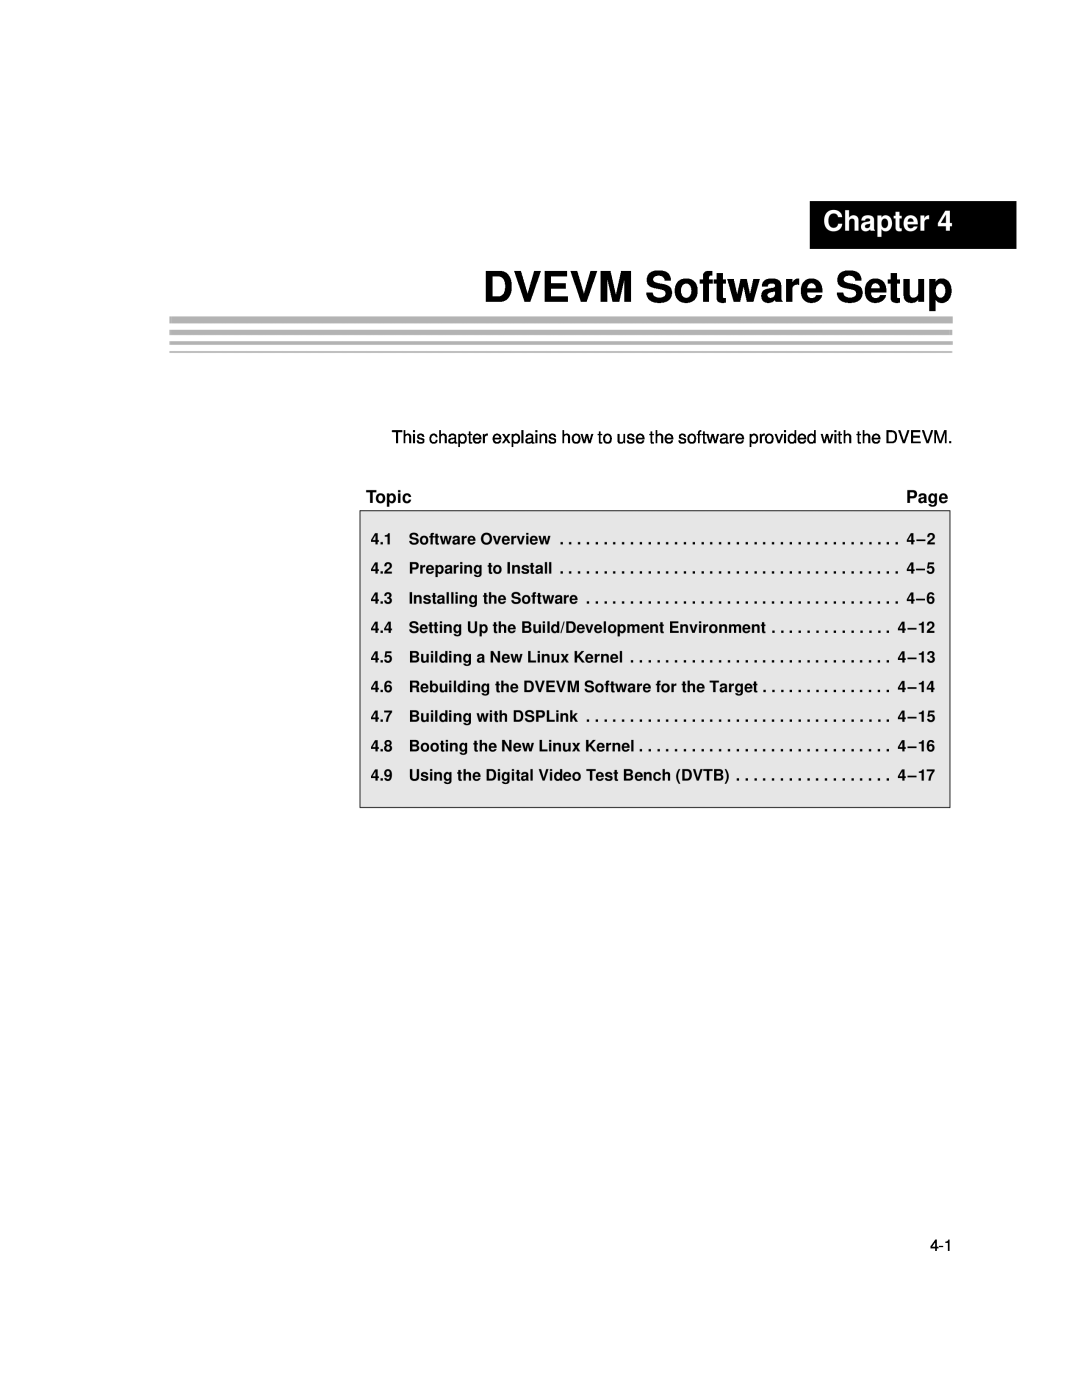 Texas Instruments TMS320DM357 DVEVM v2.05 manual DVEVM Software Setup, Chapter 